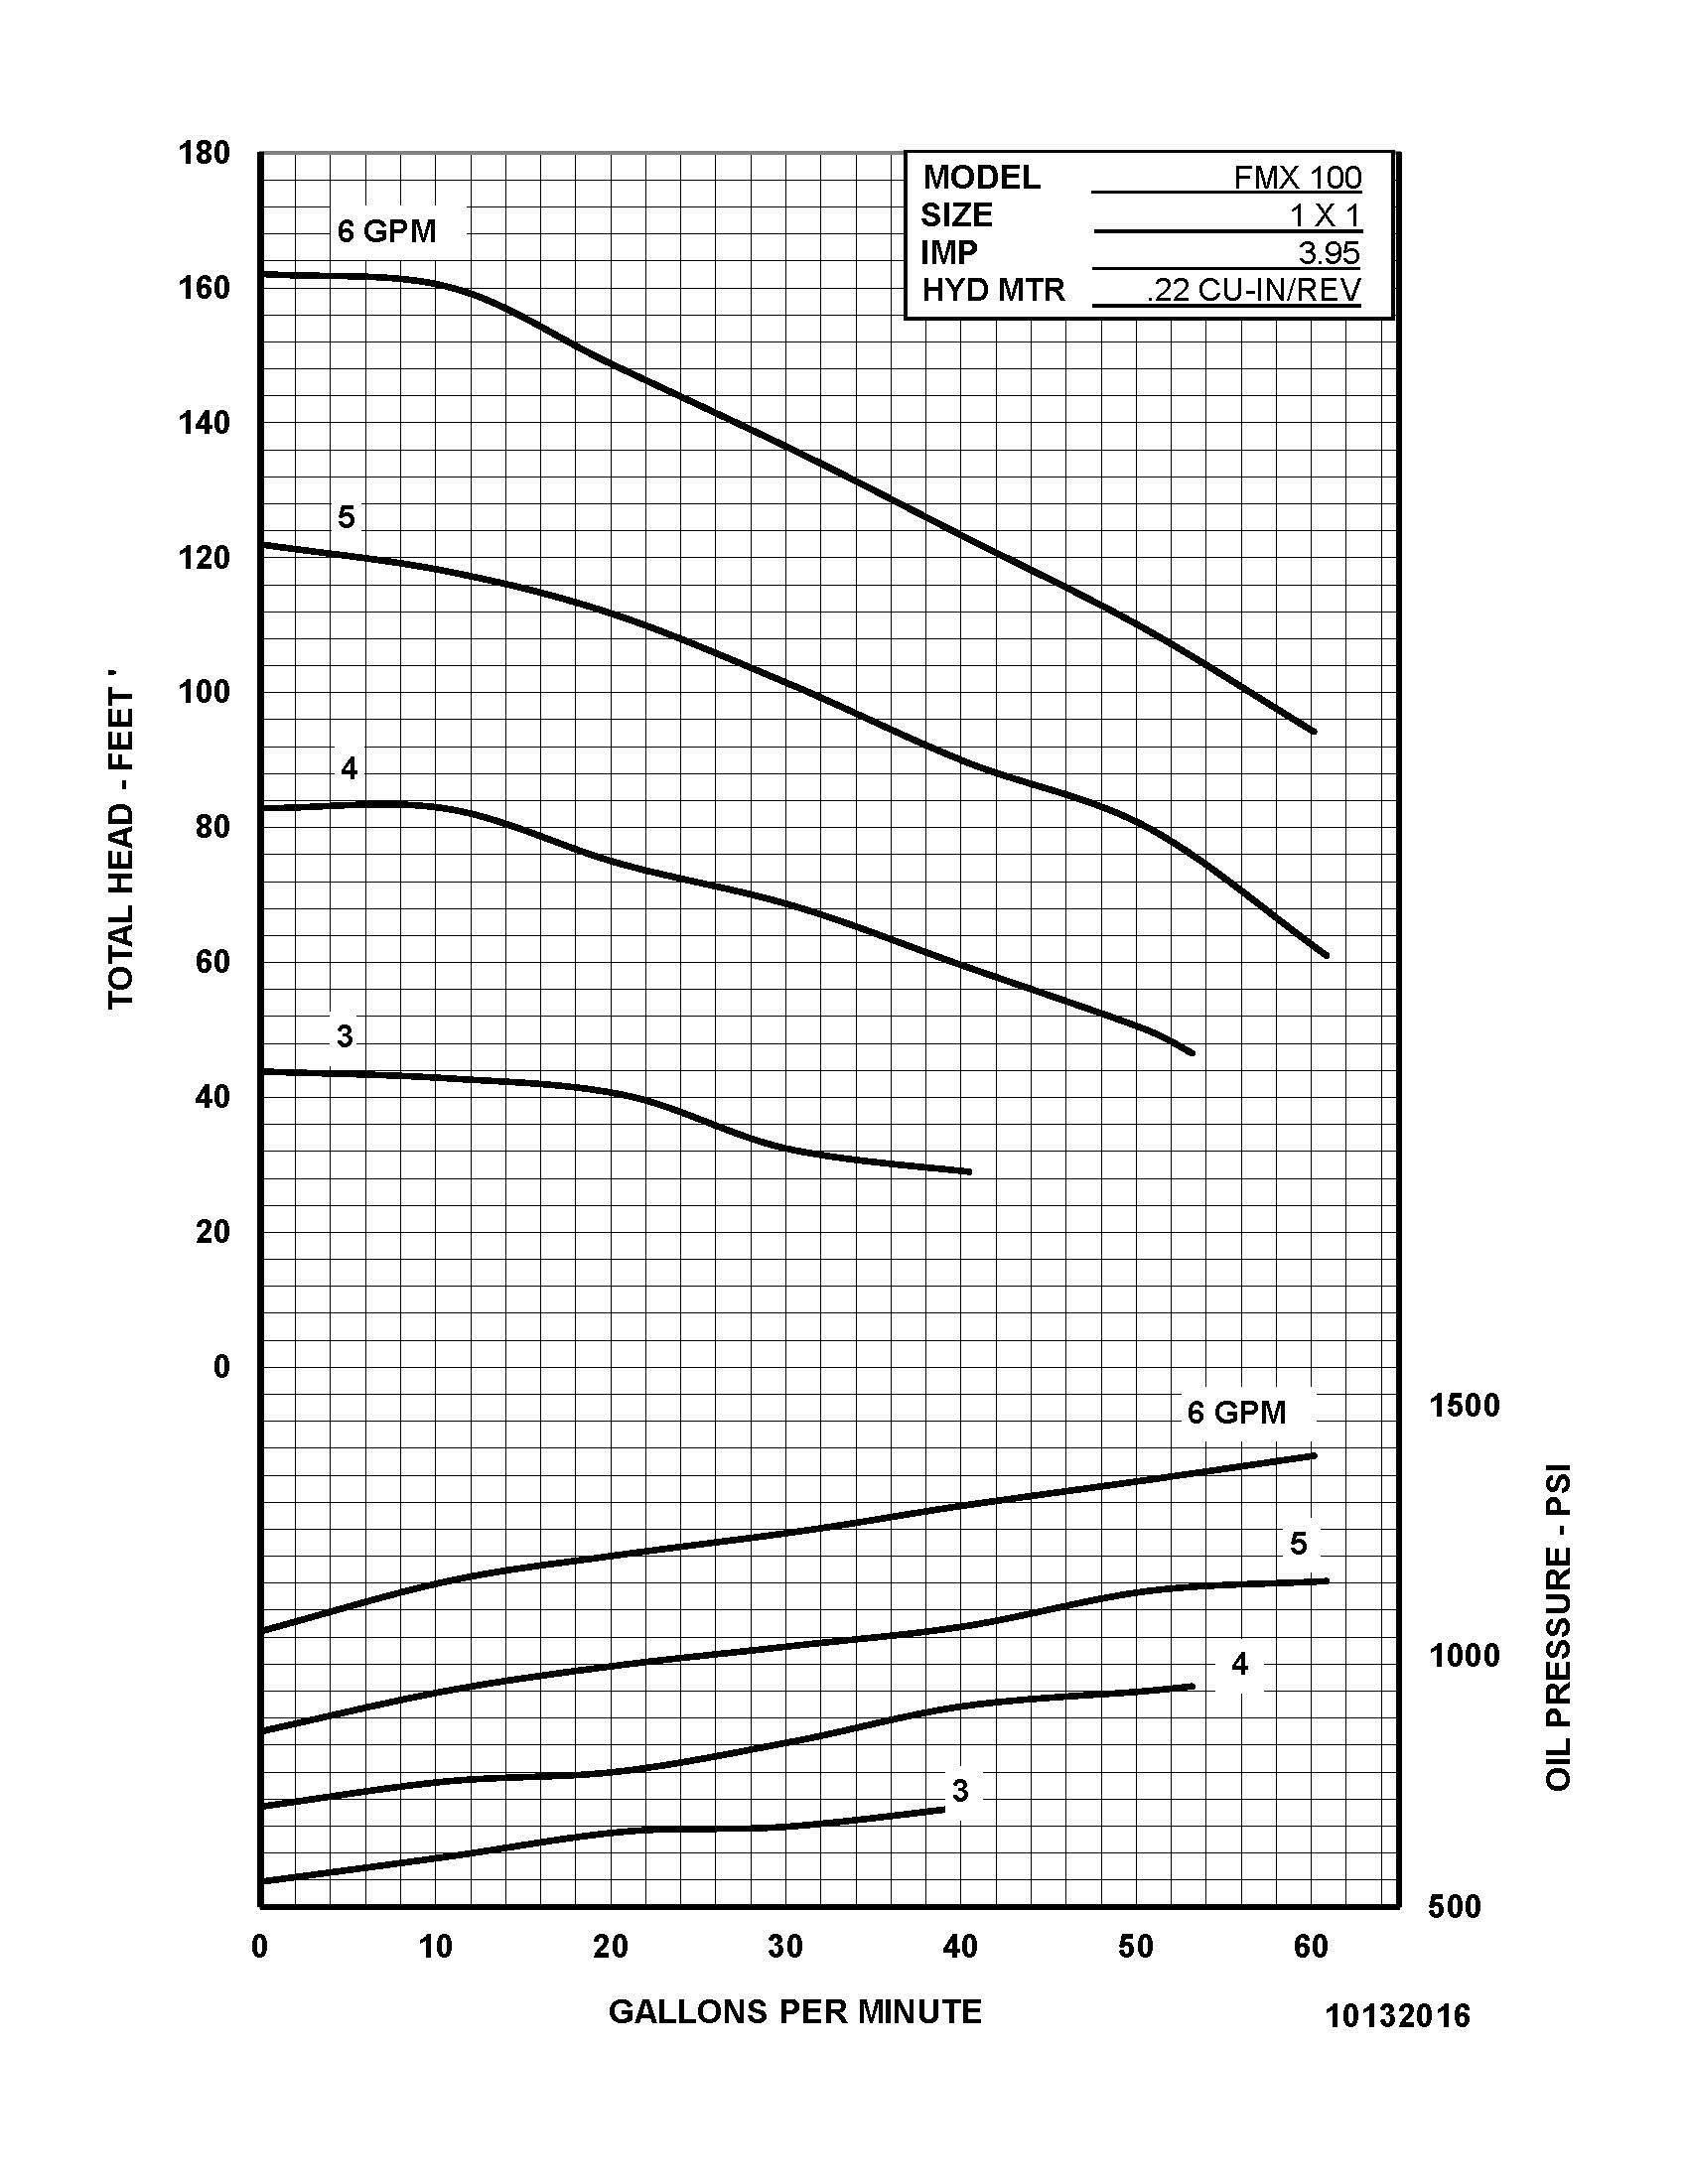 fmx-100-industrial-vacuum-pump_curve-10132016